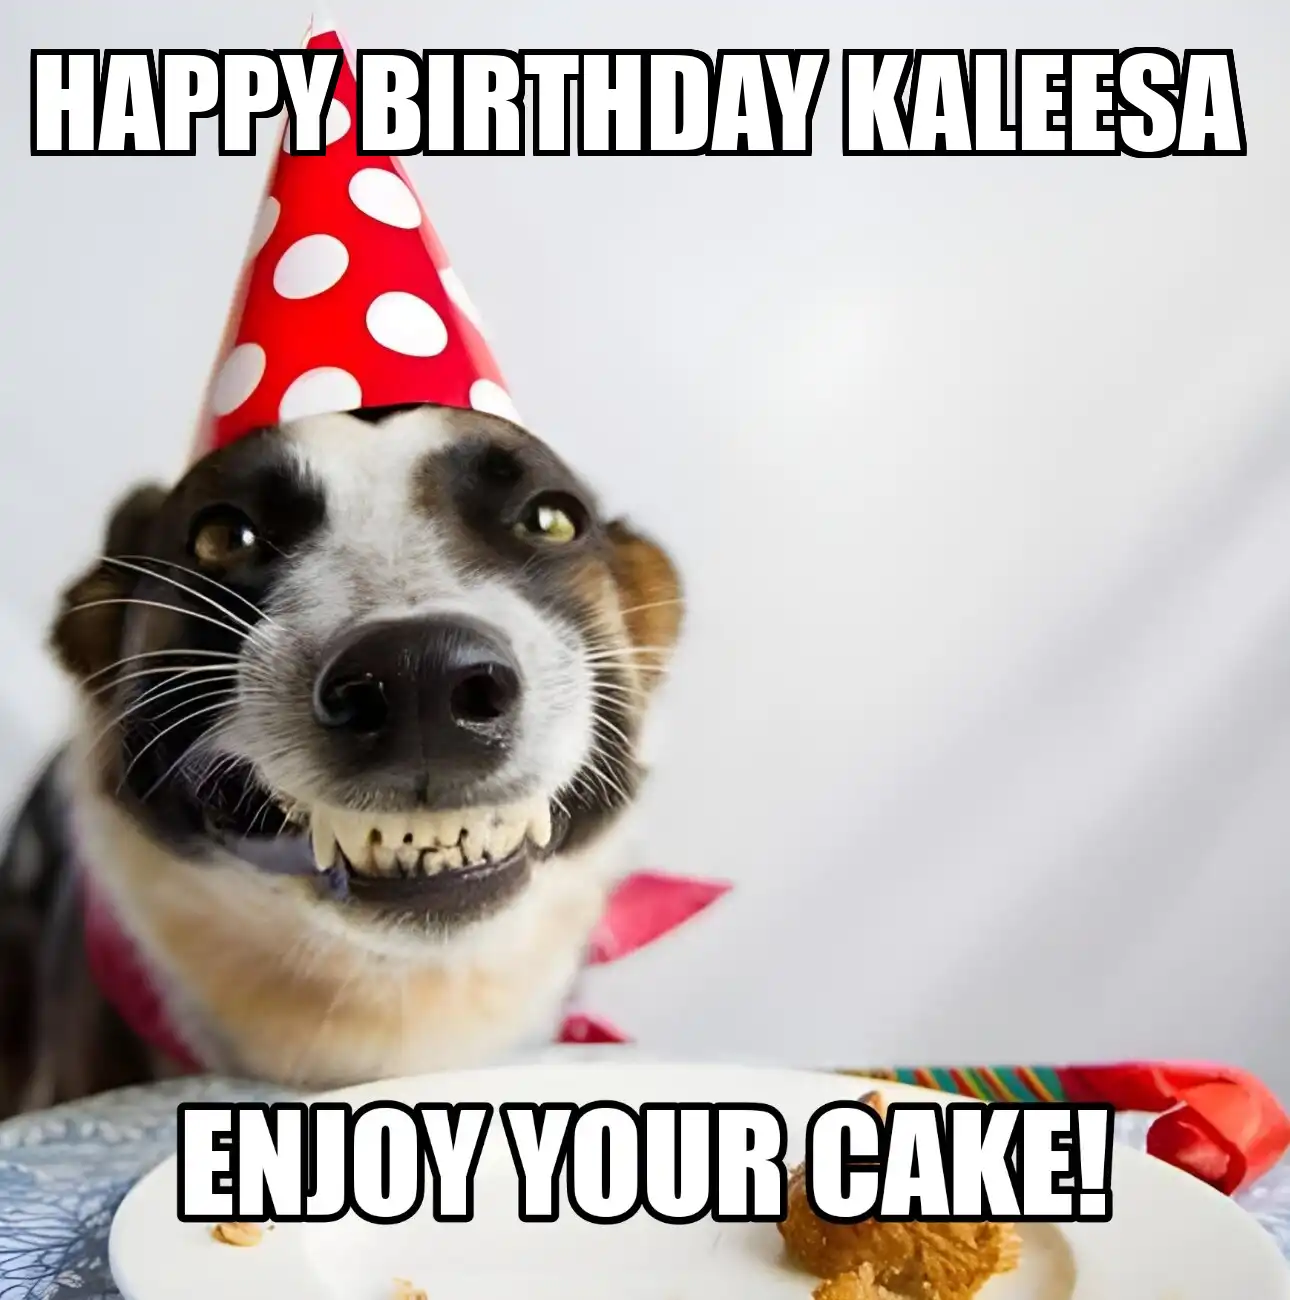 Happy Birthday Kaleesa Enjoy Your Cake Dog Meme